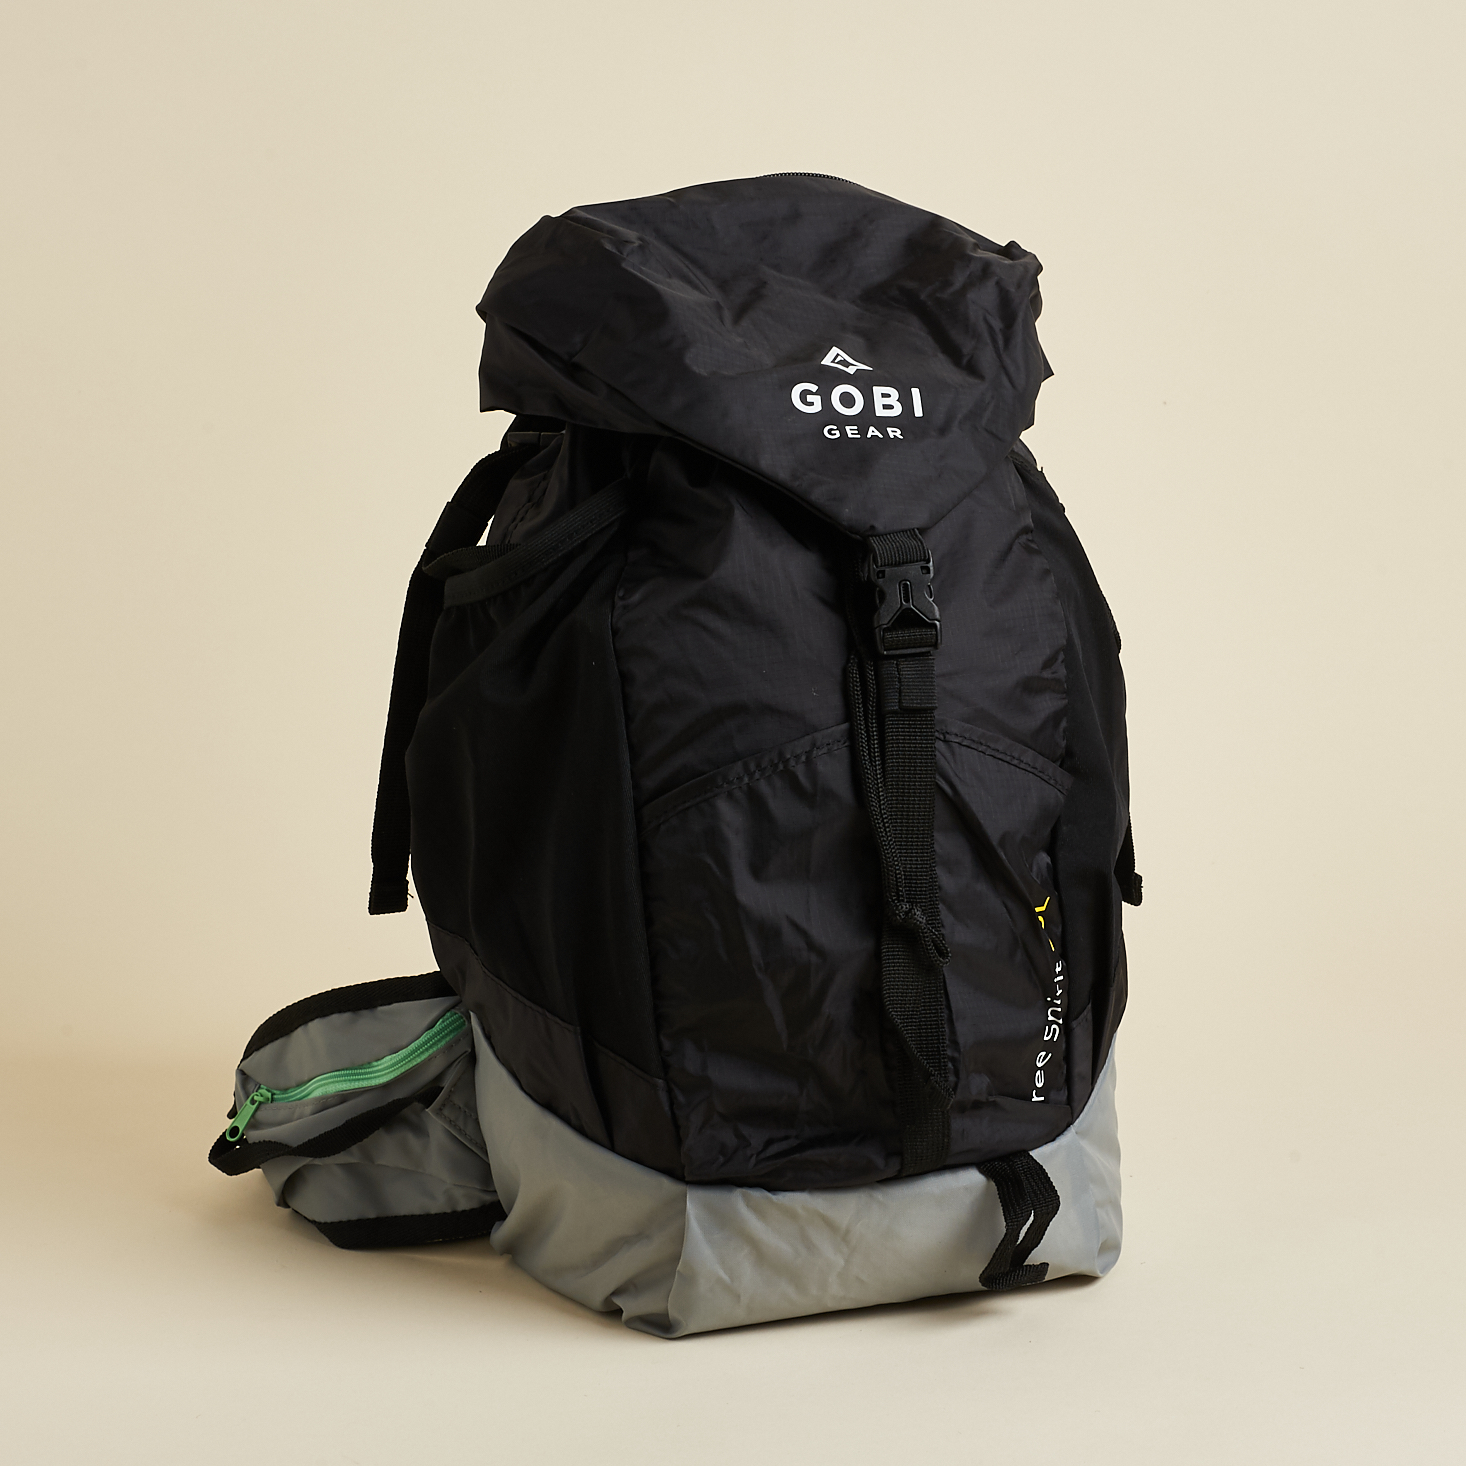 Gobi Gear Free Spirit Backpack